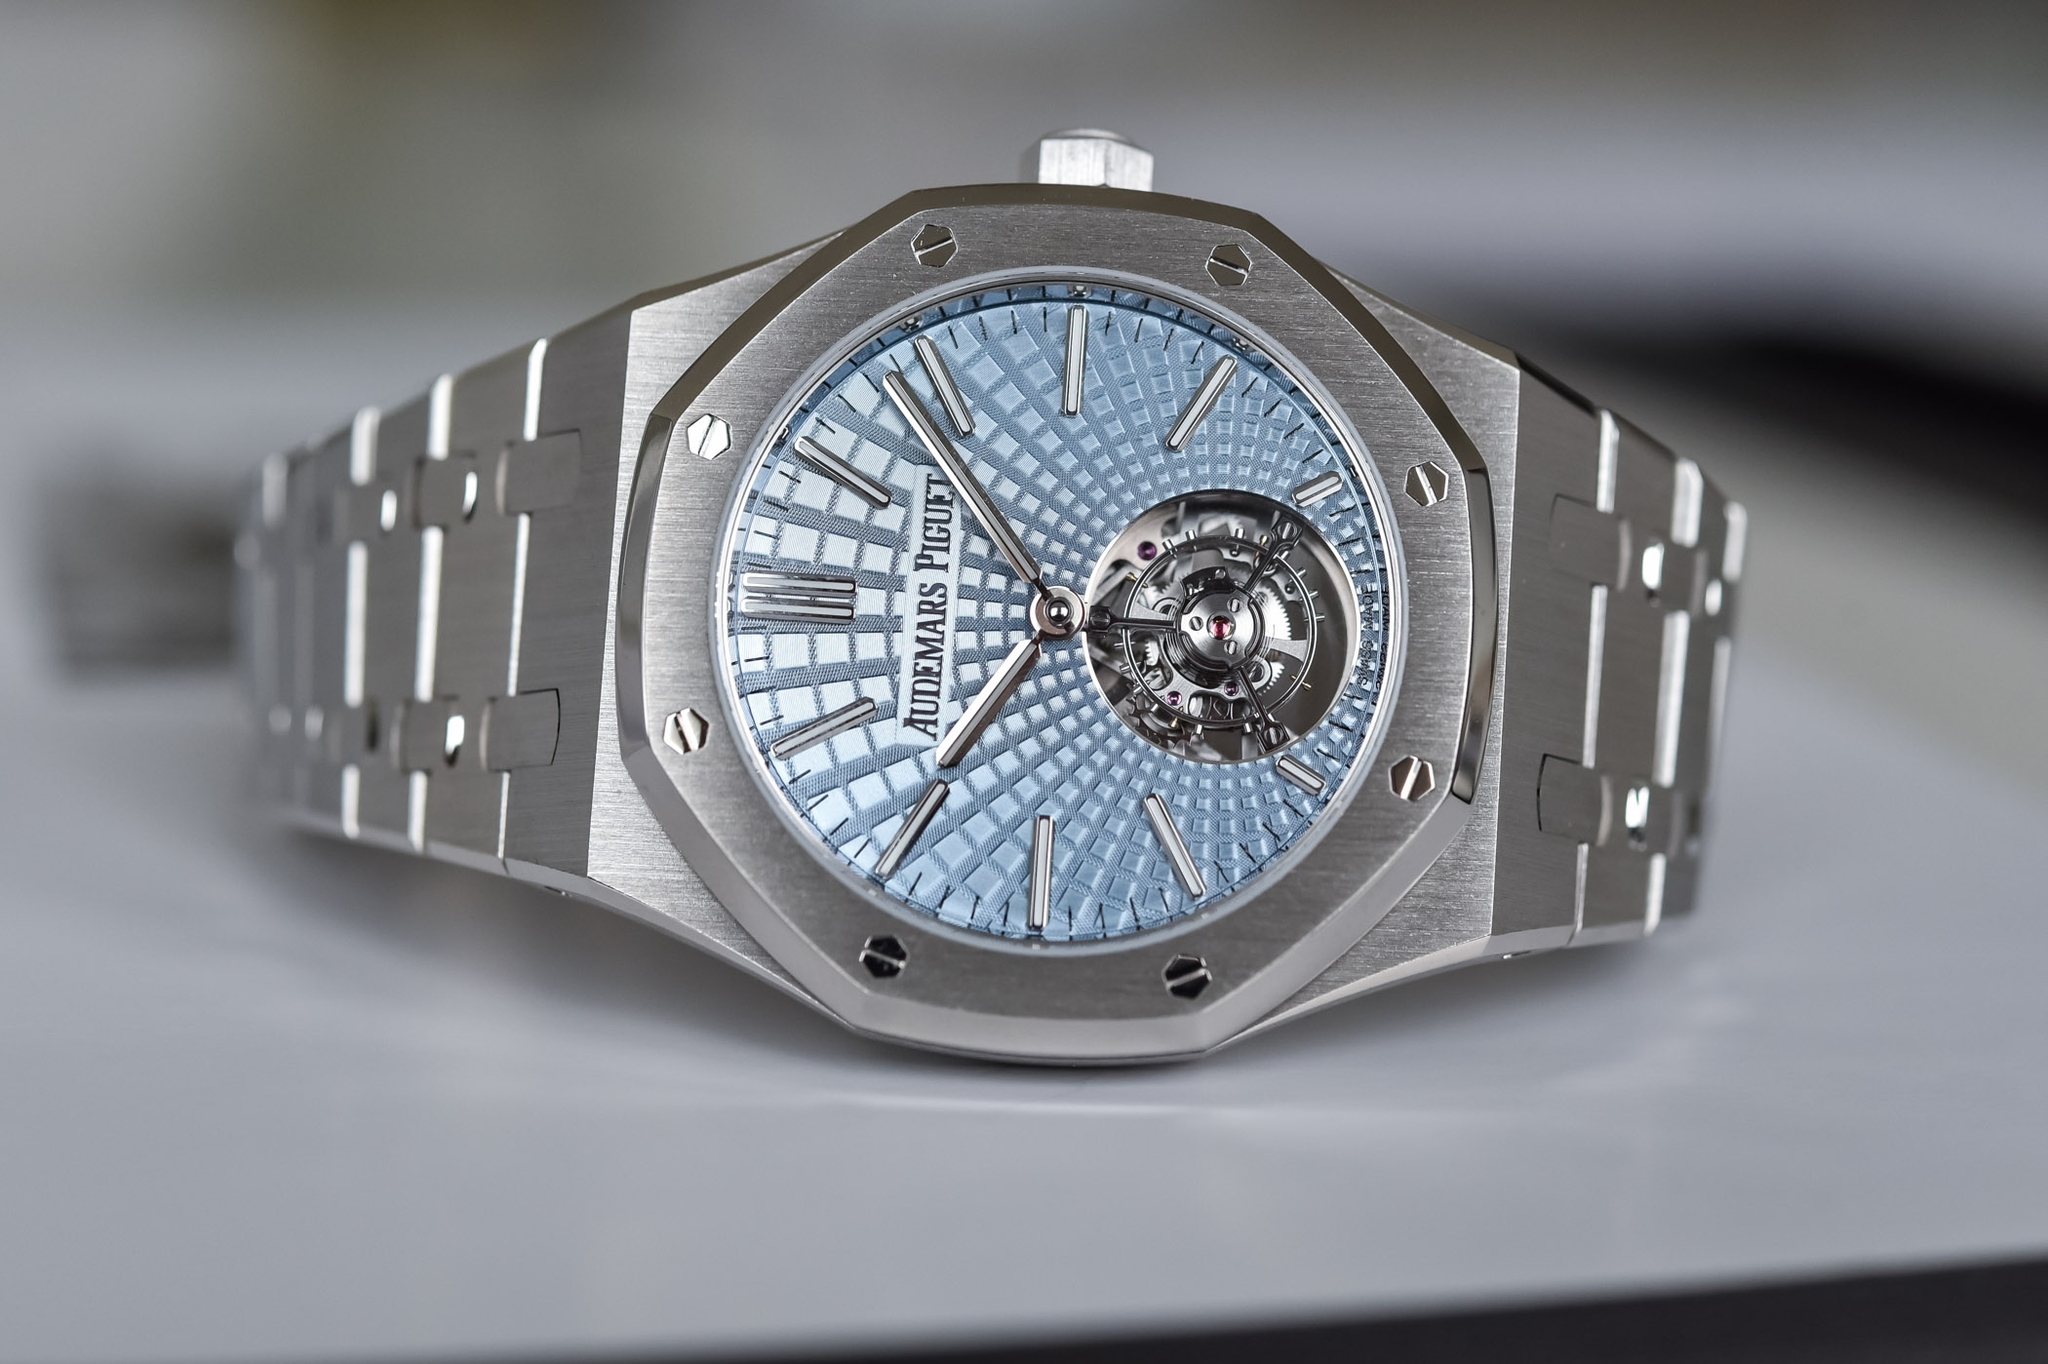 đồng hồ Audemars Piguet Royal Oak Selfwinding Flying Tourbillon Platinum mặt số Light Blue dial (ref. 26530PT.OO.1220PT.01)